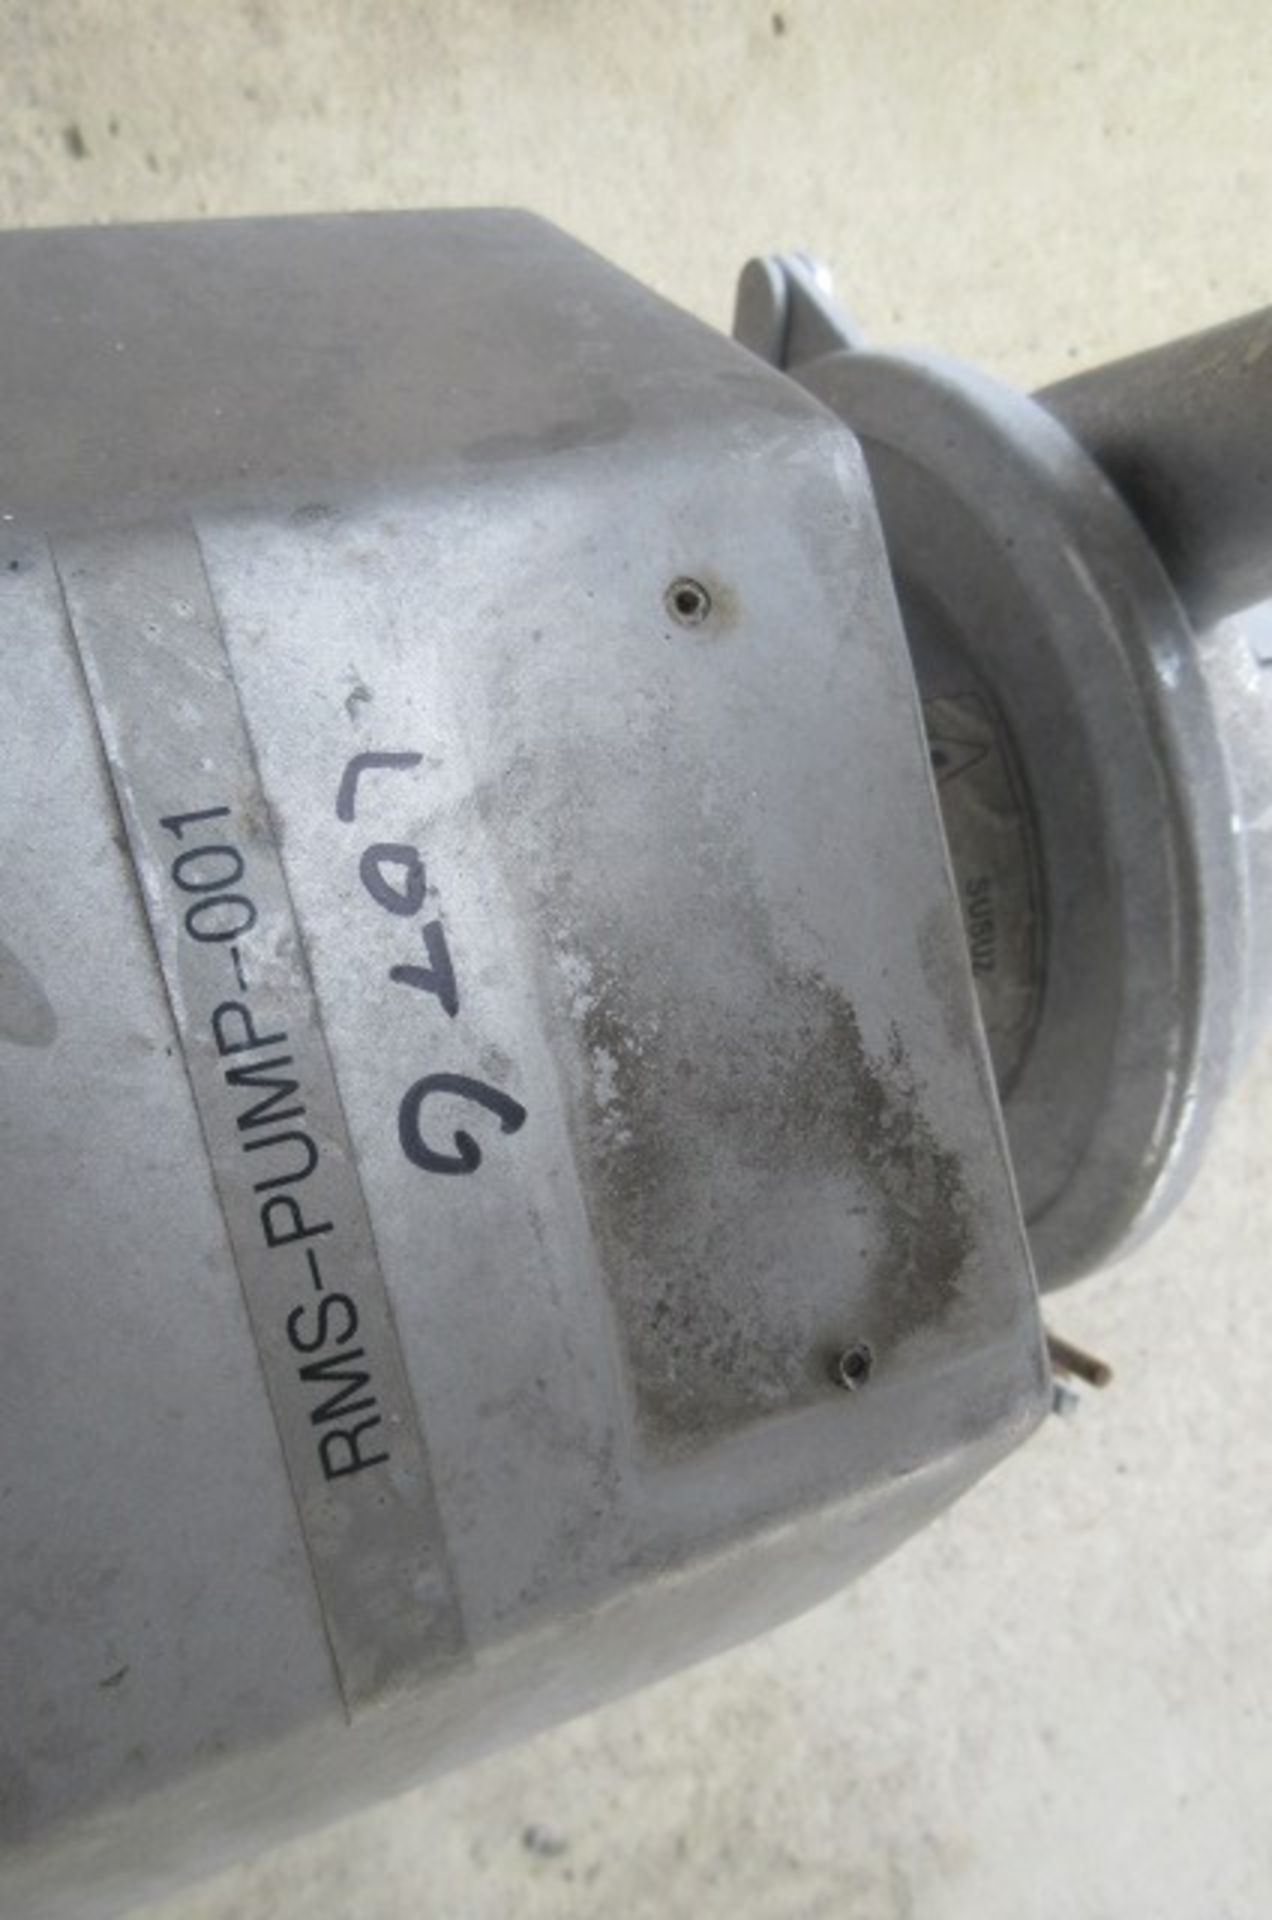 Gemak GZ 30-11 904 s/s enclosed pump - Image 2 of 2